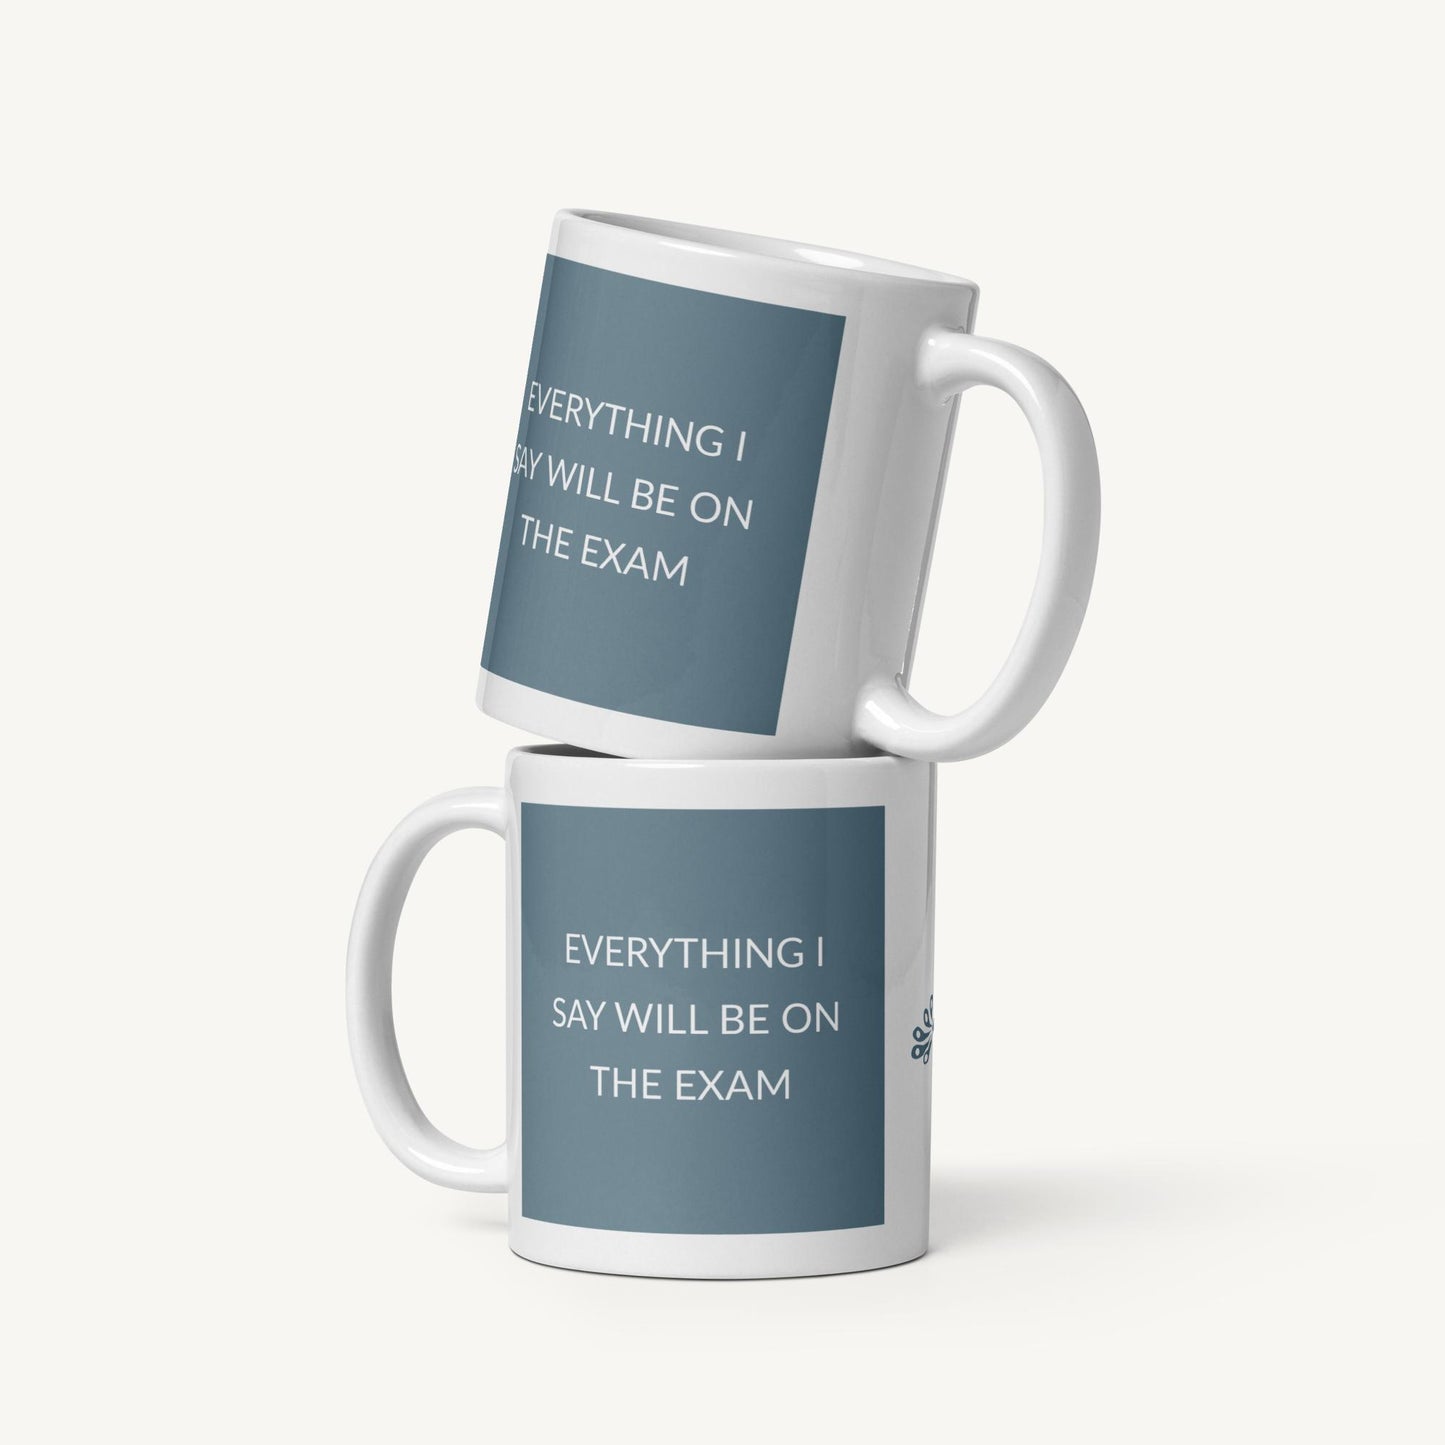 "Everything I say will be on the exam" Mug